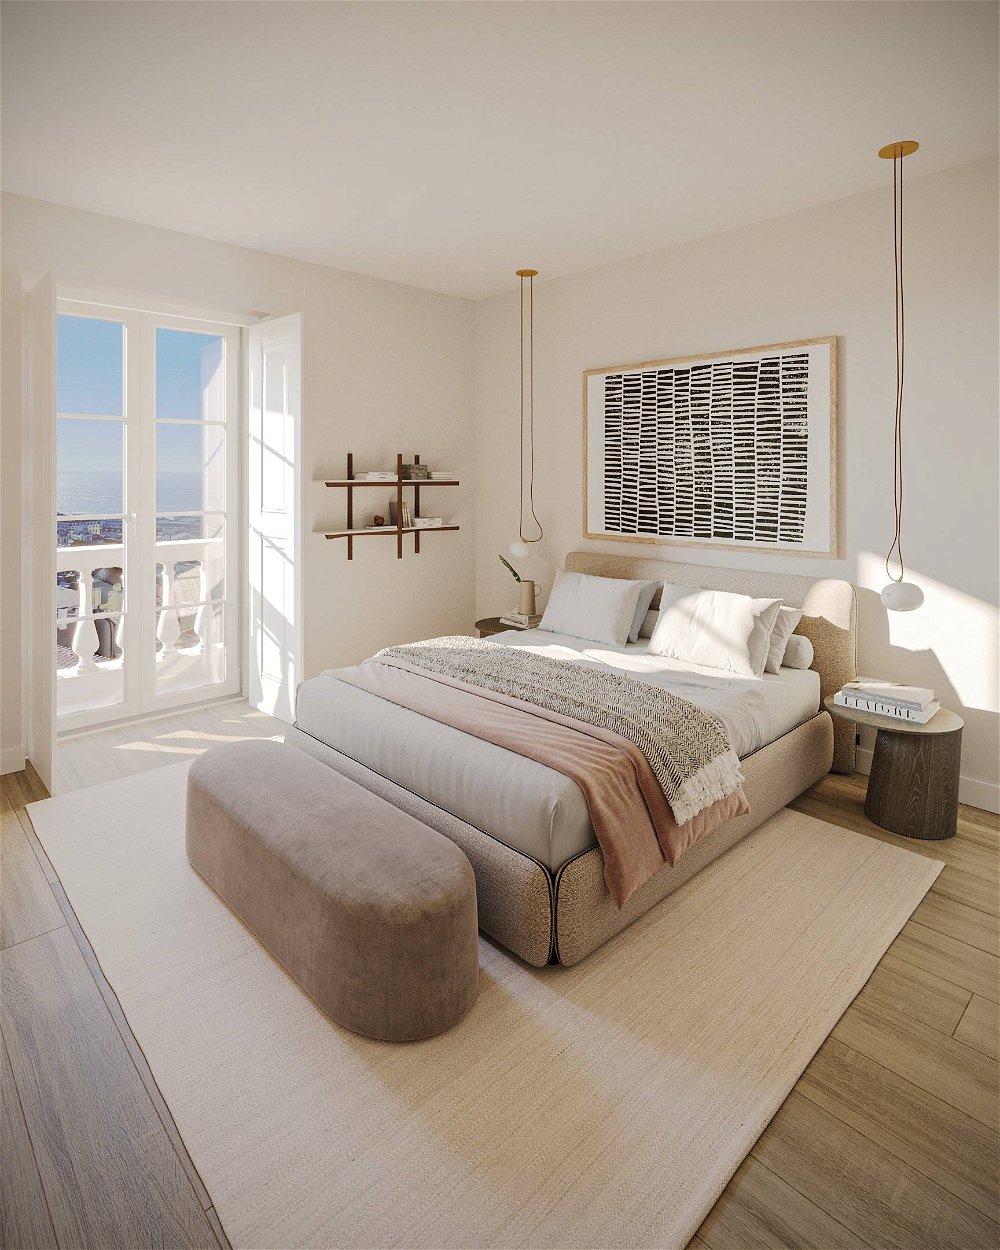 New 3-bedroom apartment, in the LIV Santa Catarina, in Lisbon 1416505831